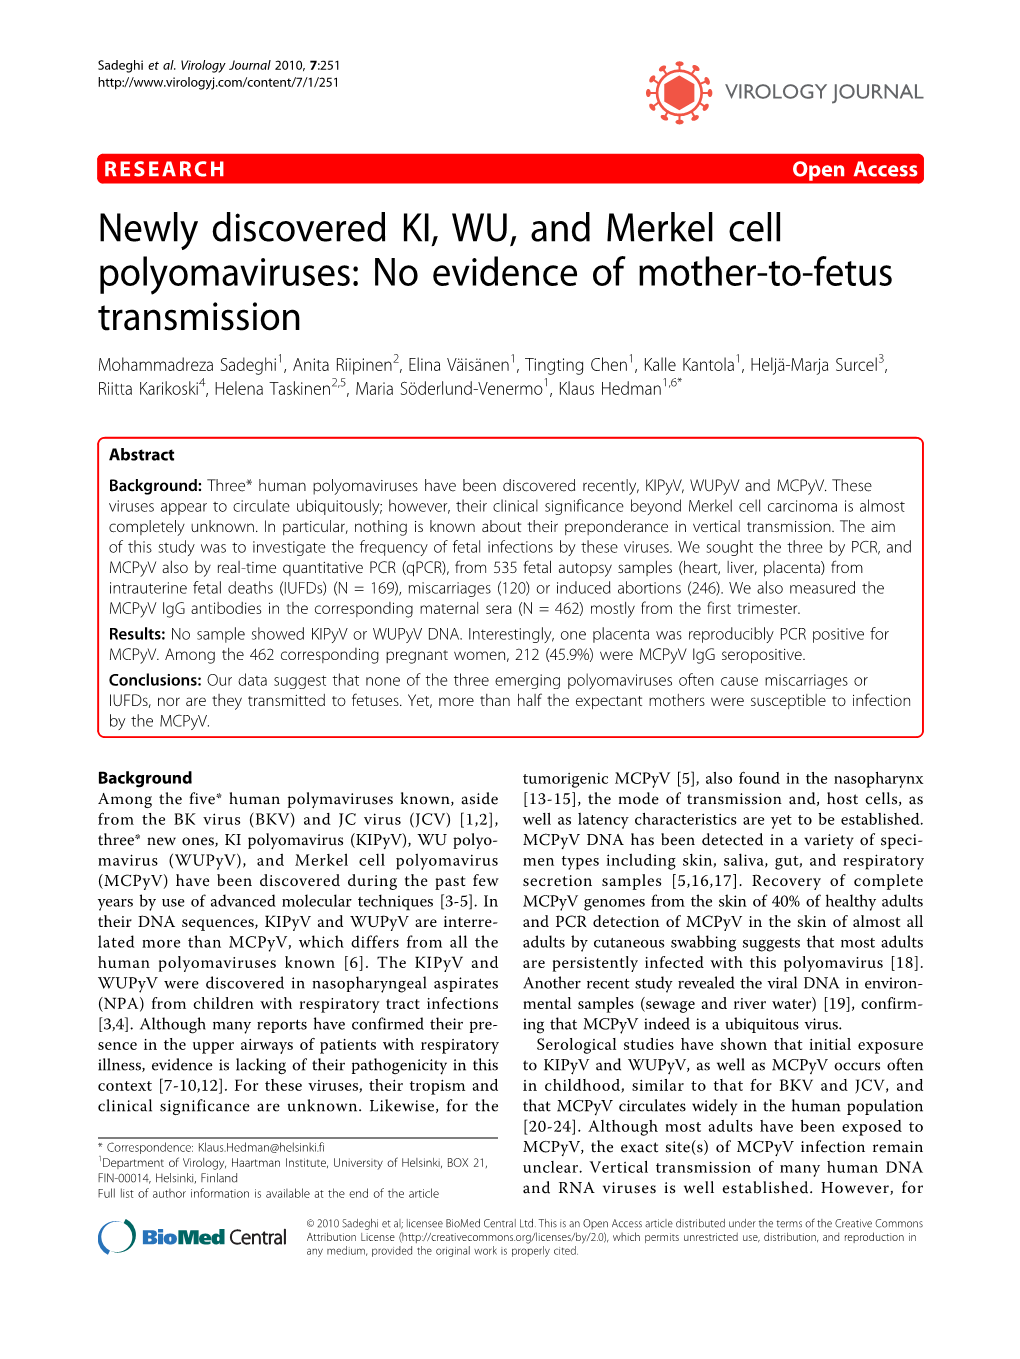 Newly Discovered KI, WU, and Merkel Cell Polyomaviruses